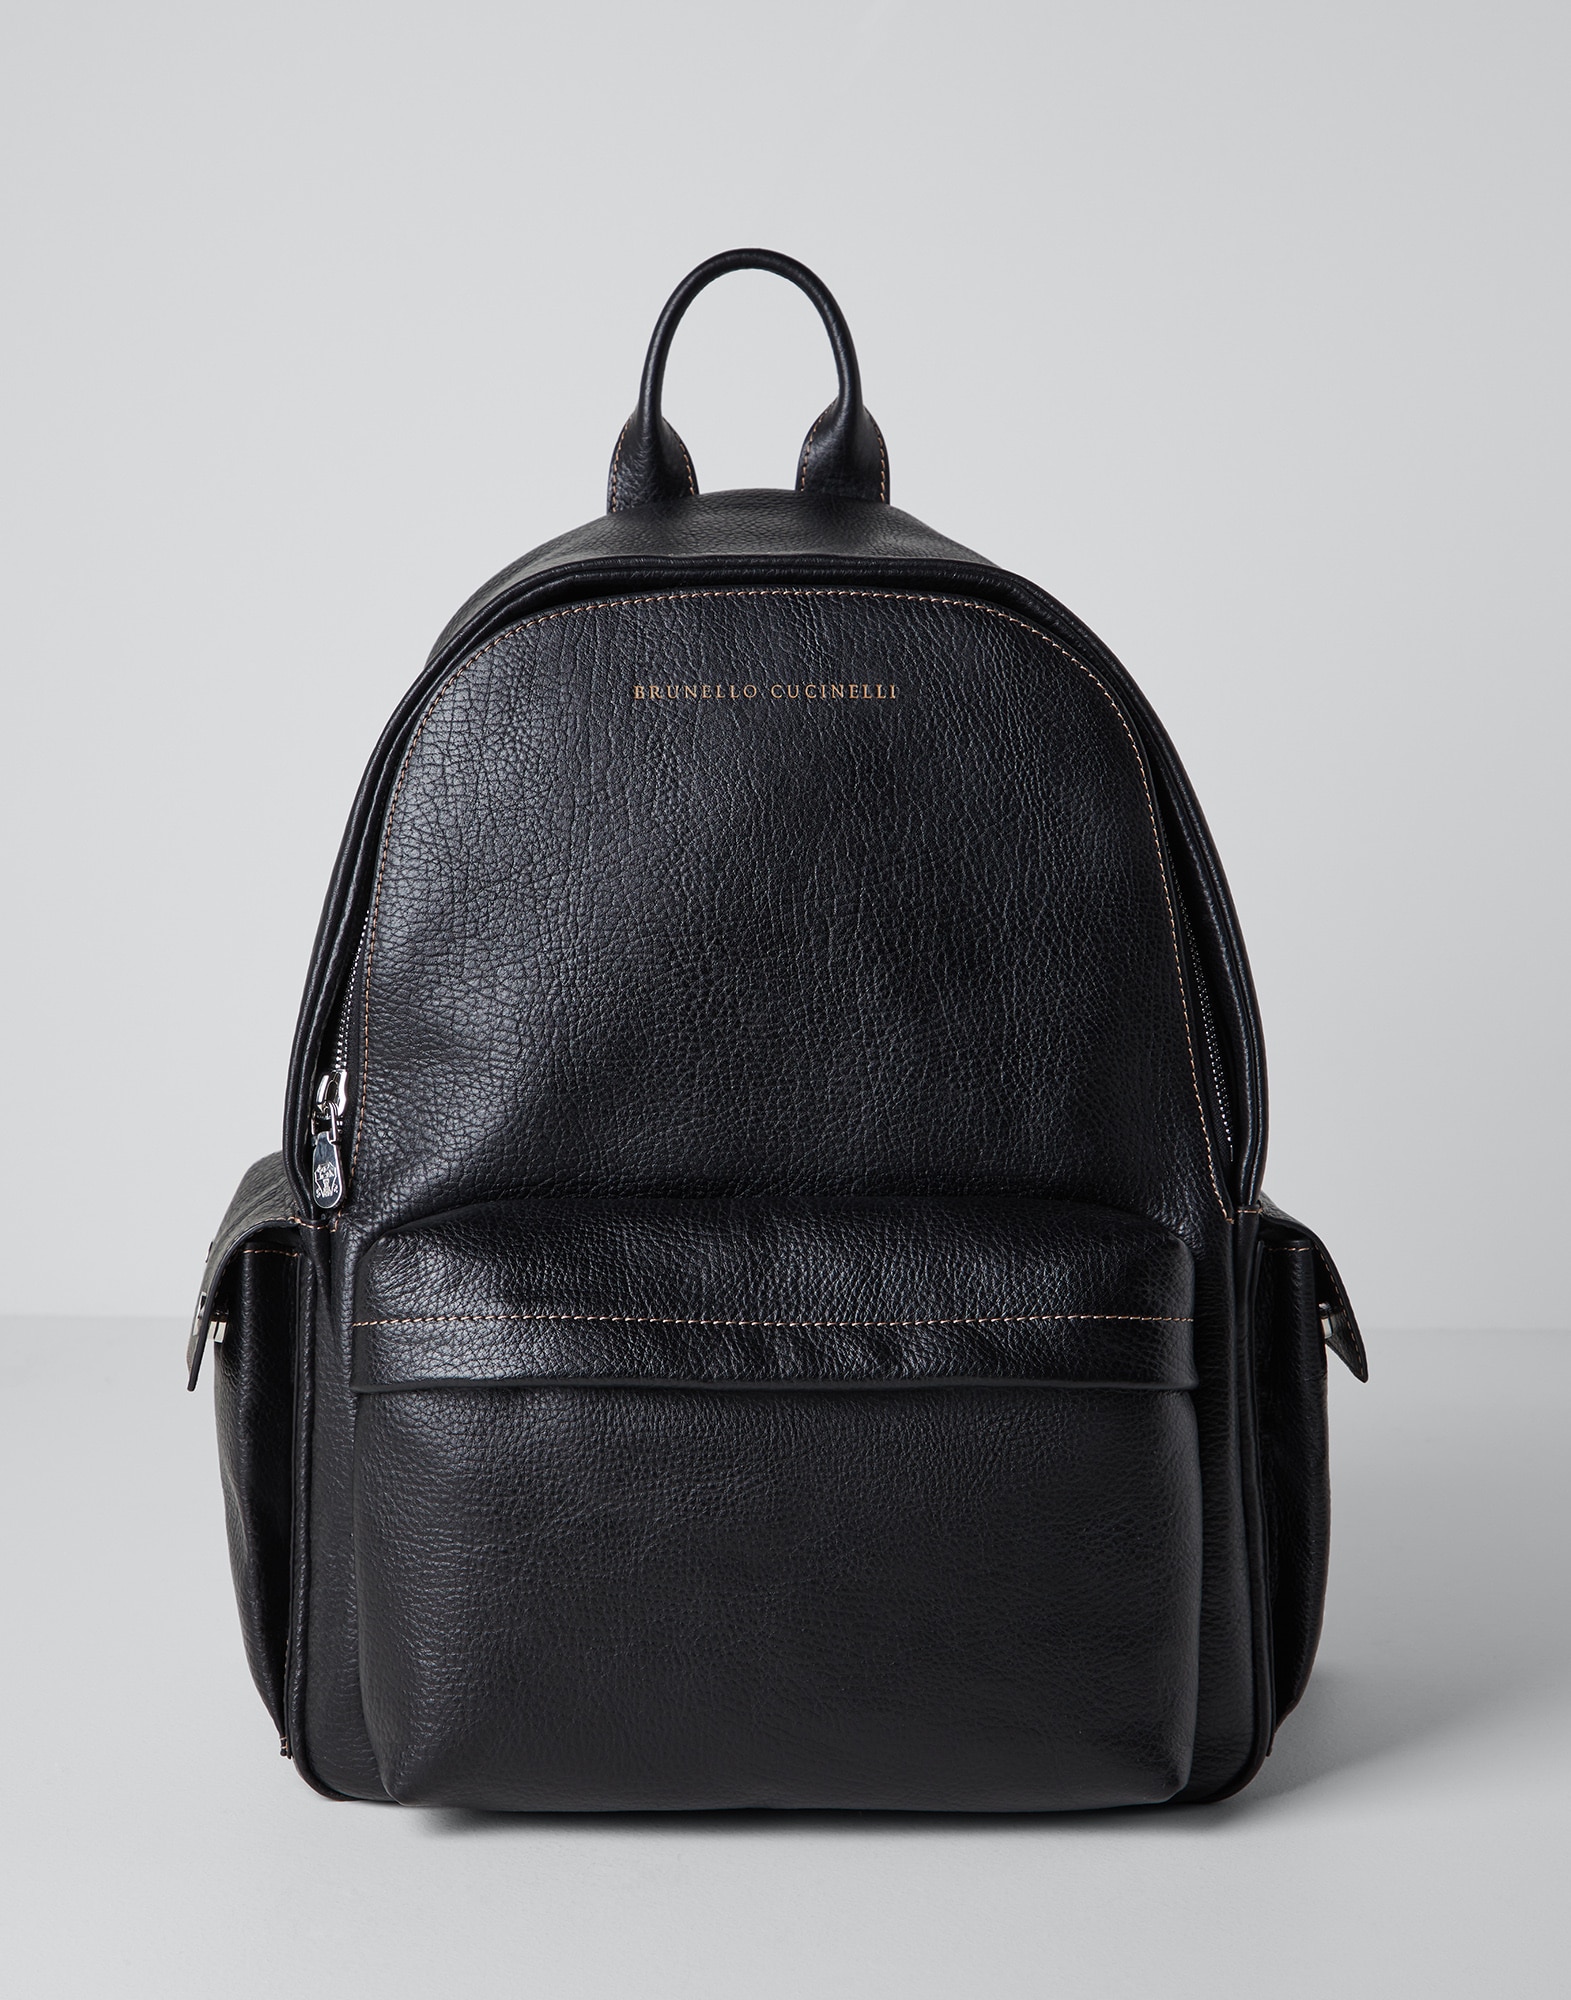 Calfskin backpack